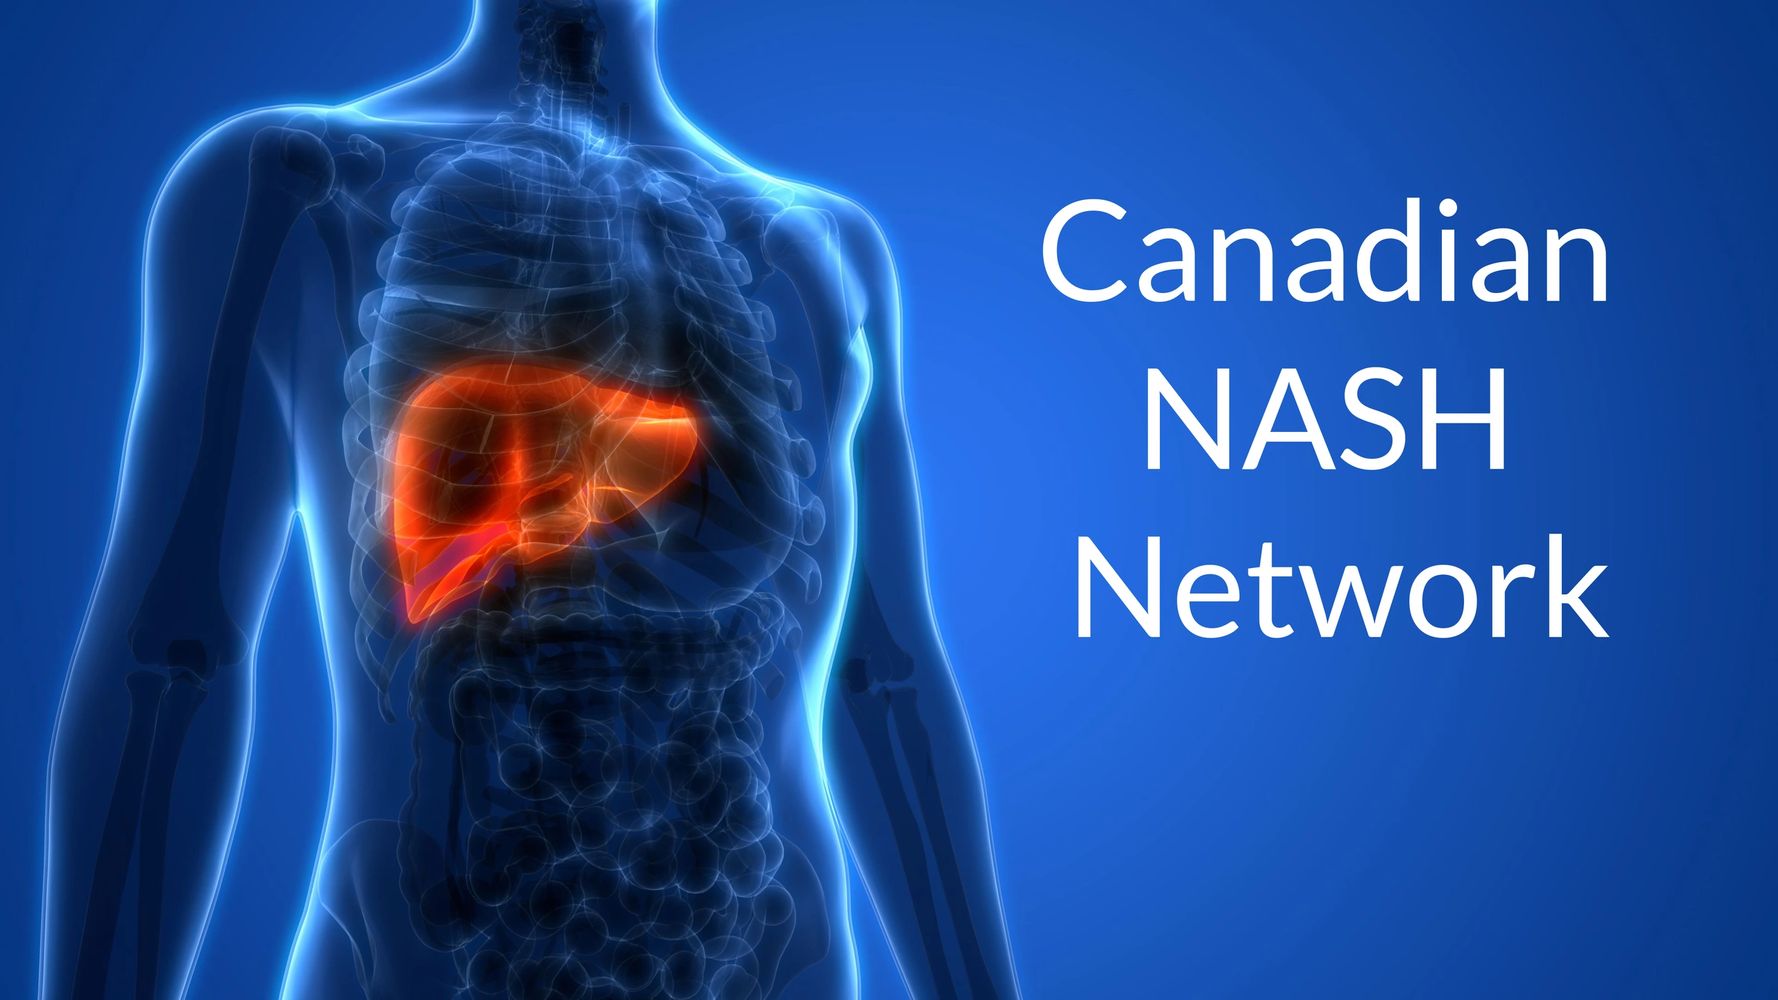 Canadian NASH Network